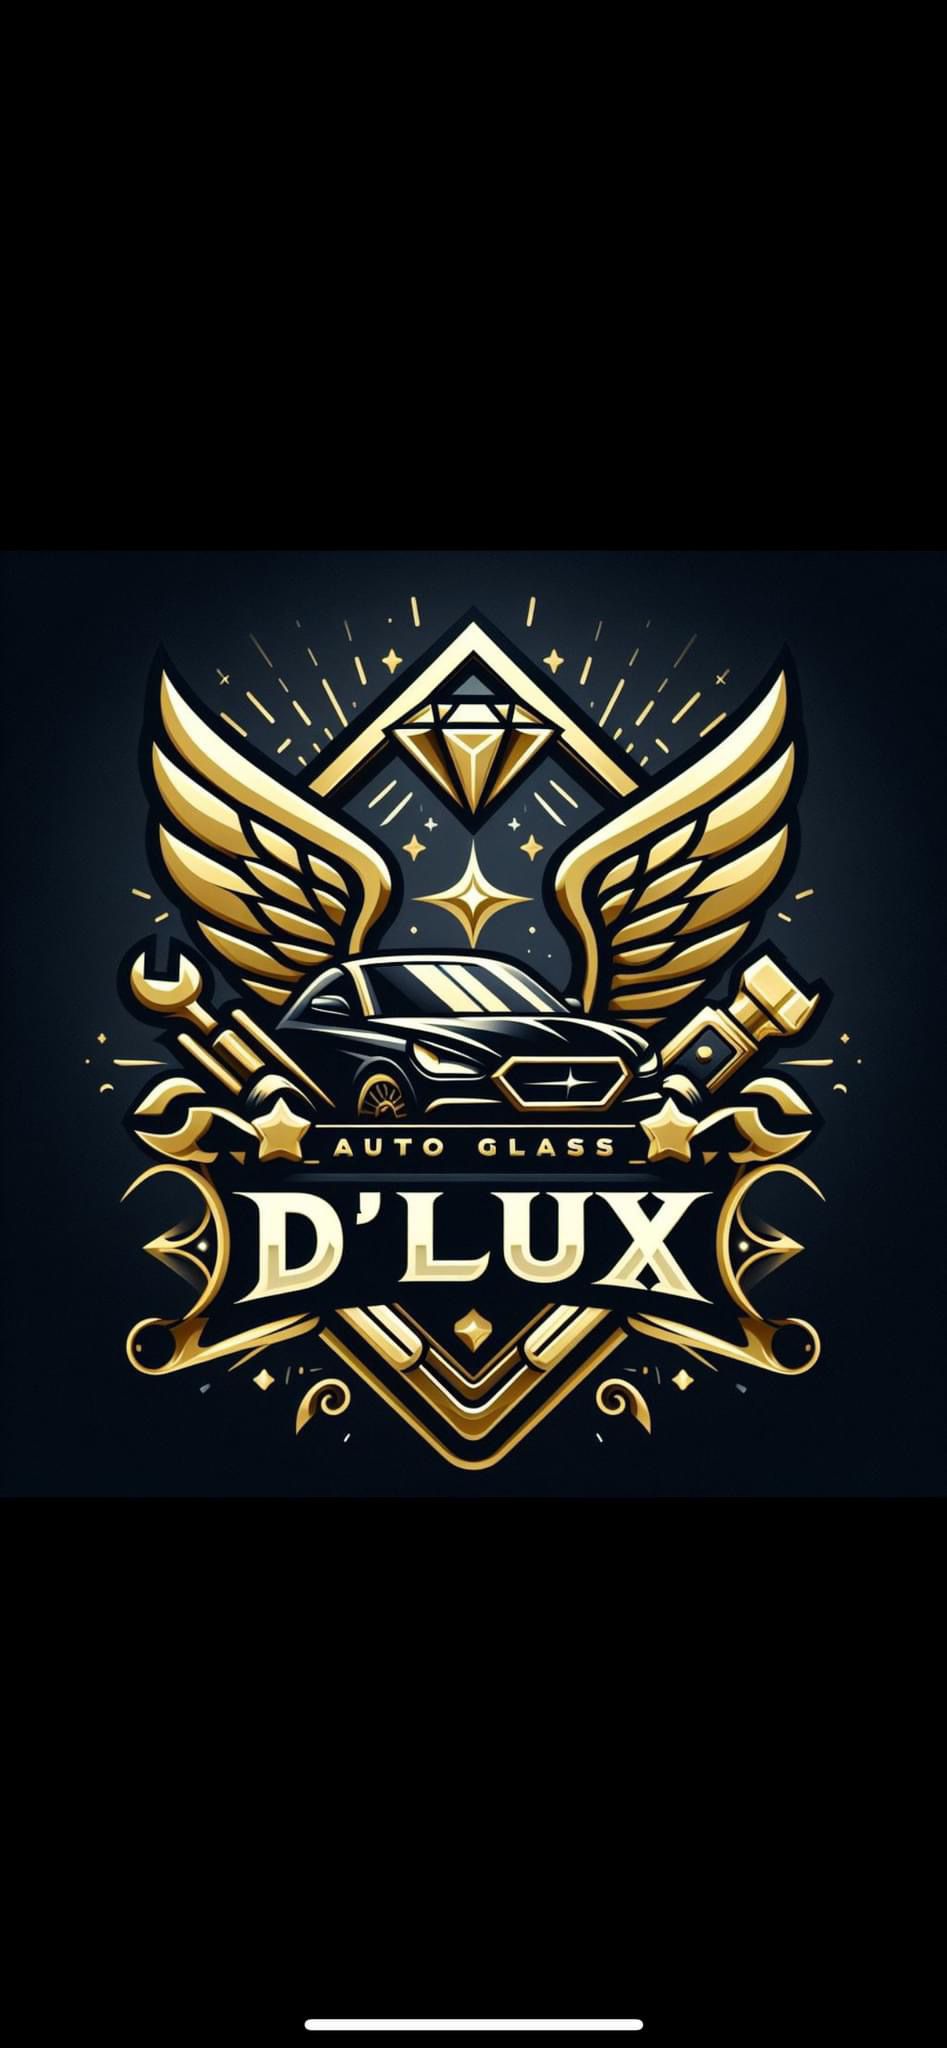 D’LUX AUTOGLASS & TINT